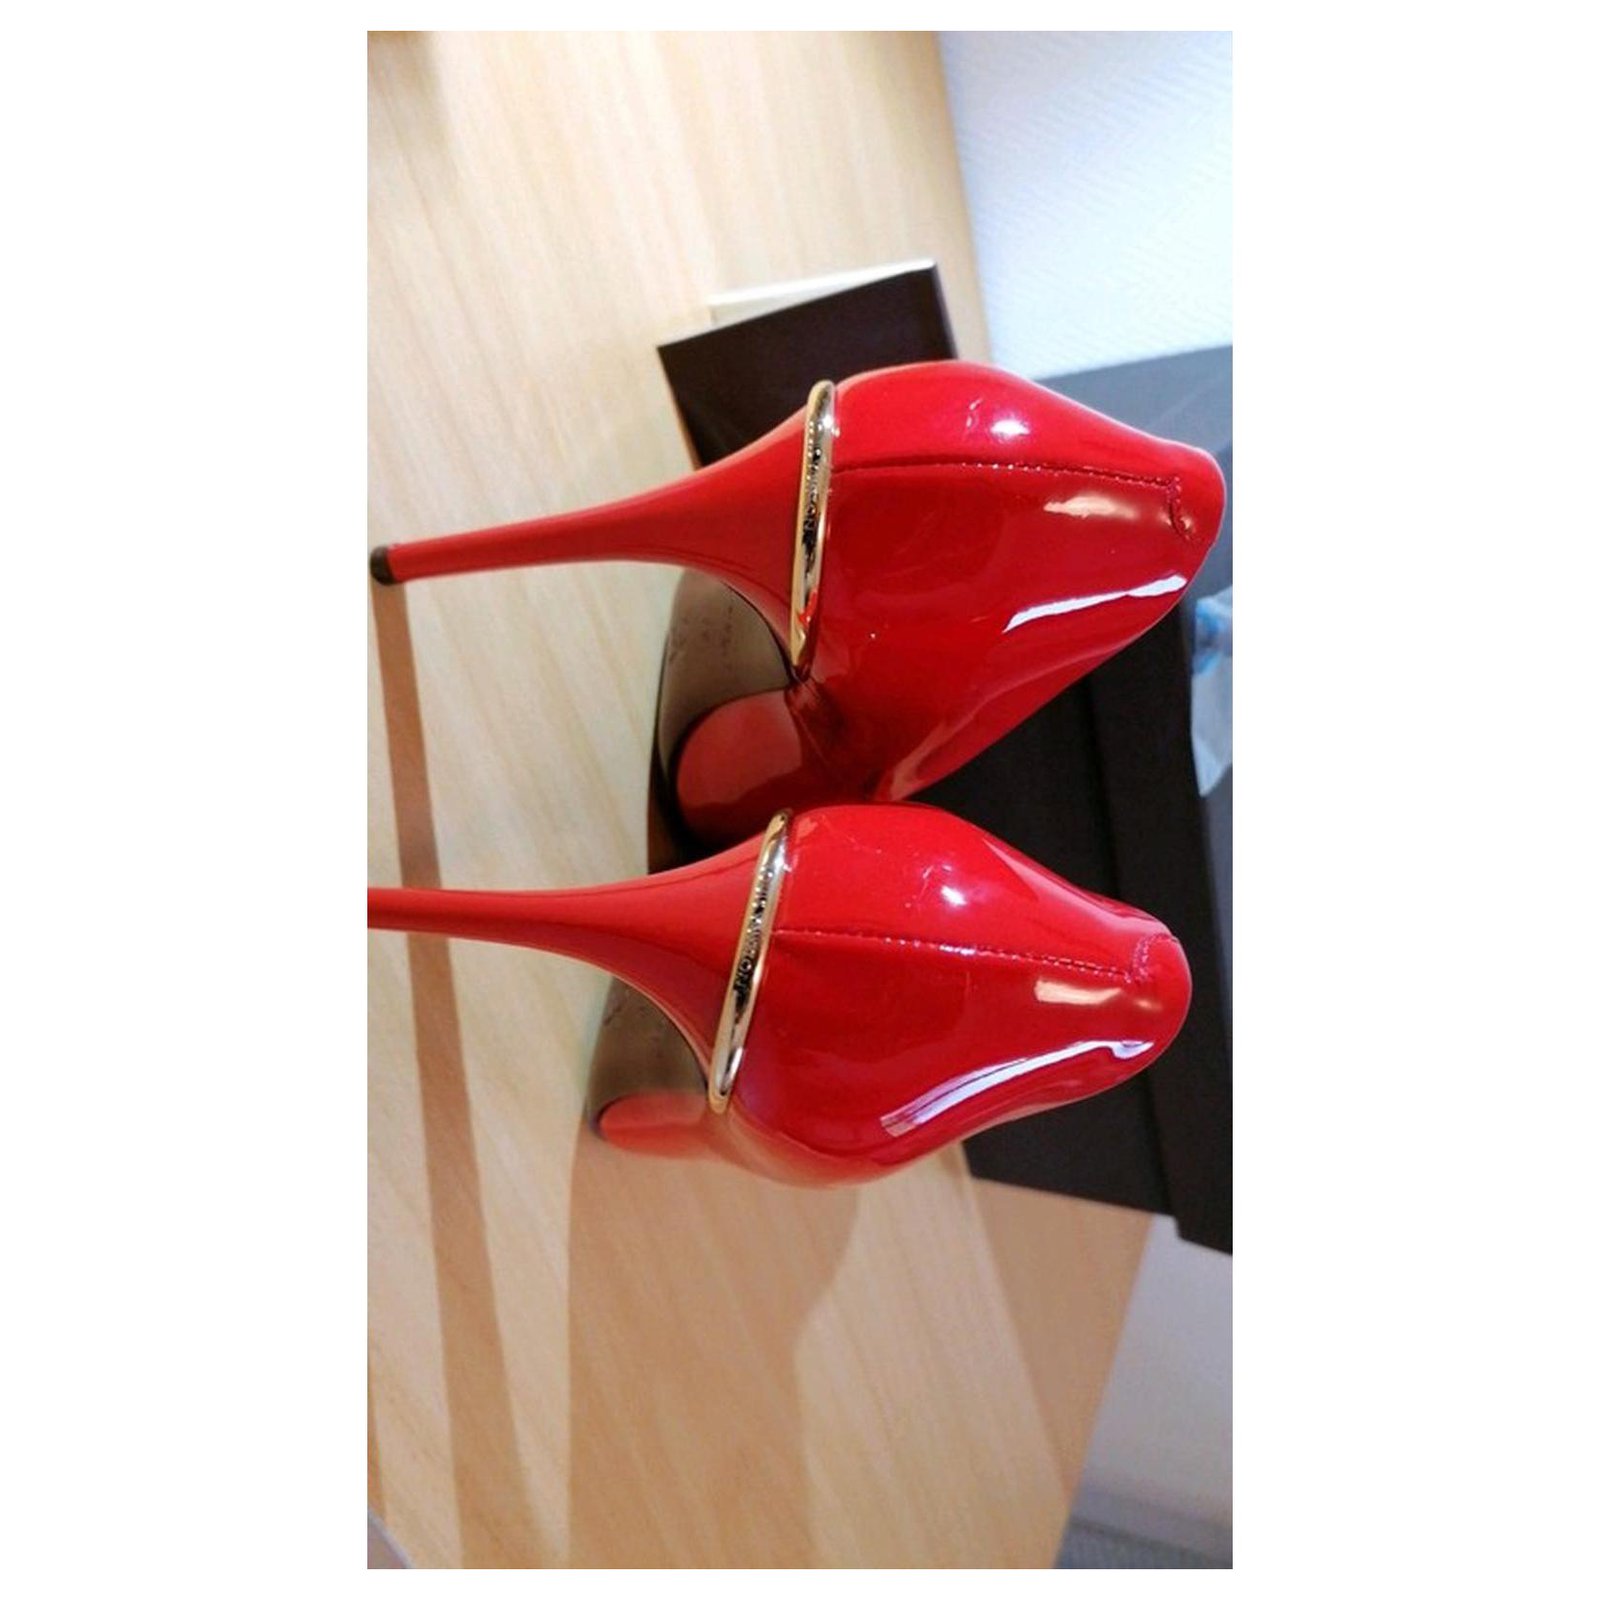 LOUIS VUITTON - Women's Fashion Red High Heels Shoes Magazine AD - D466